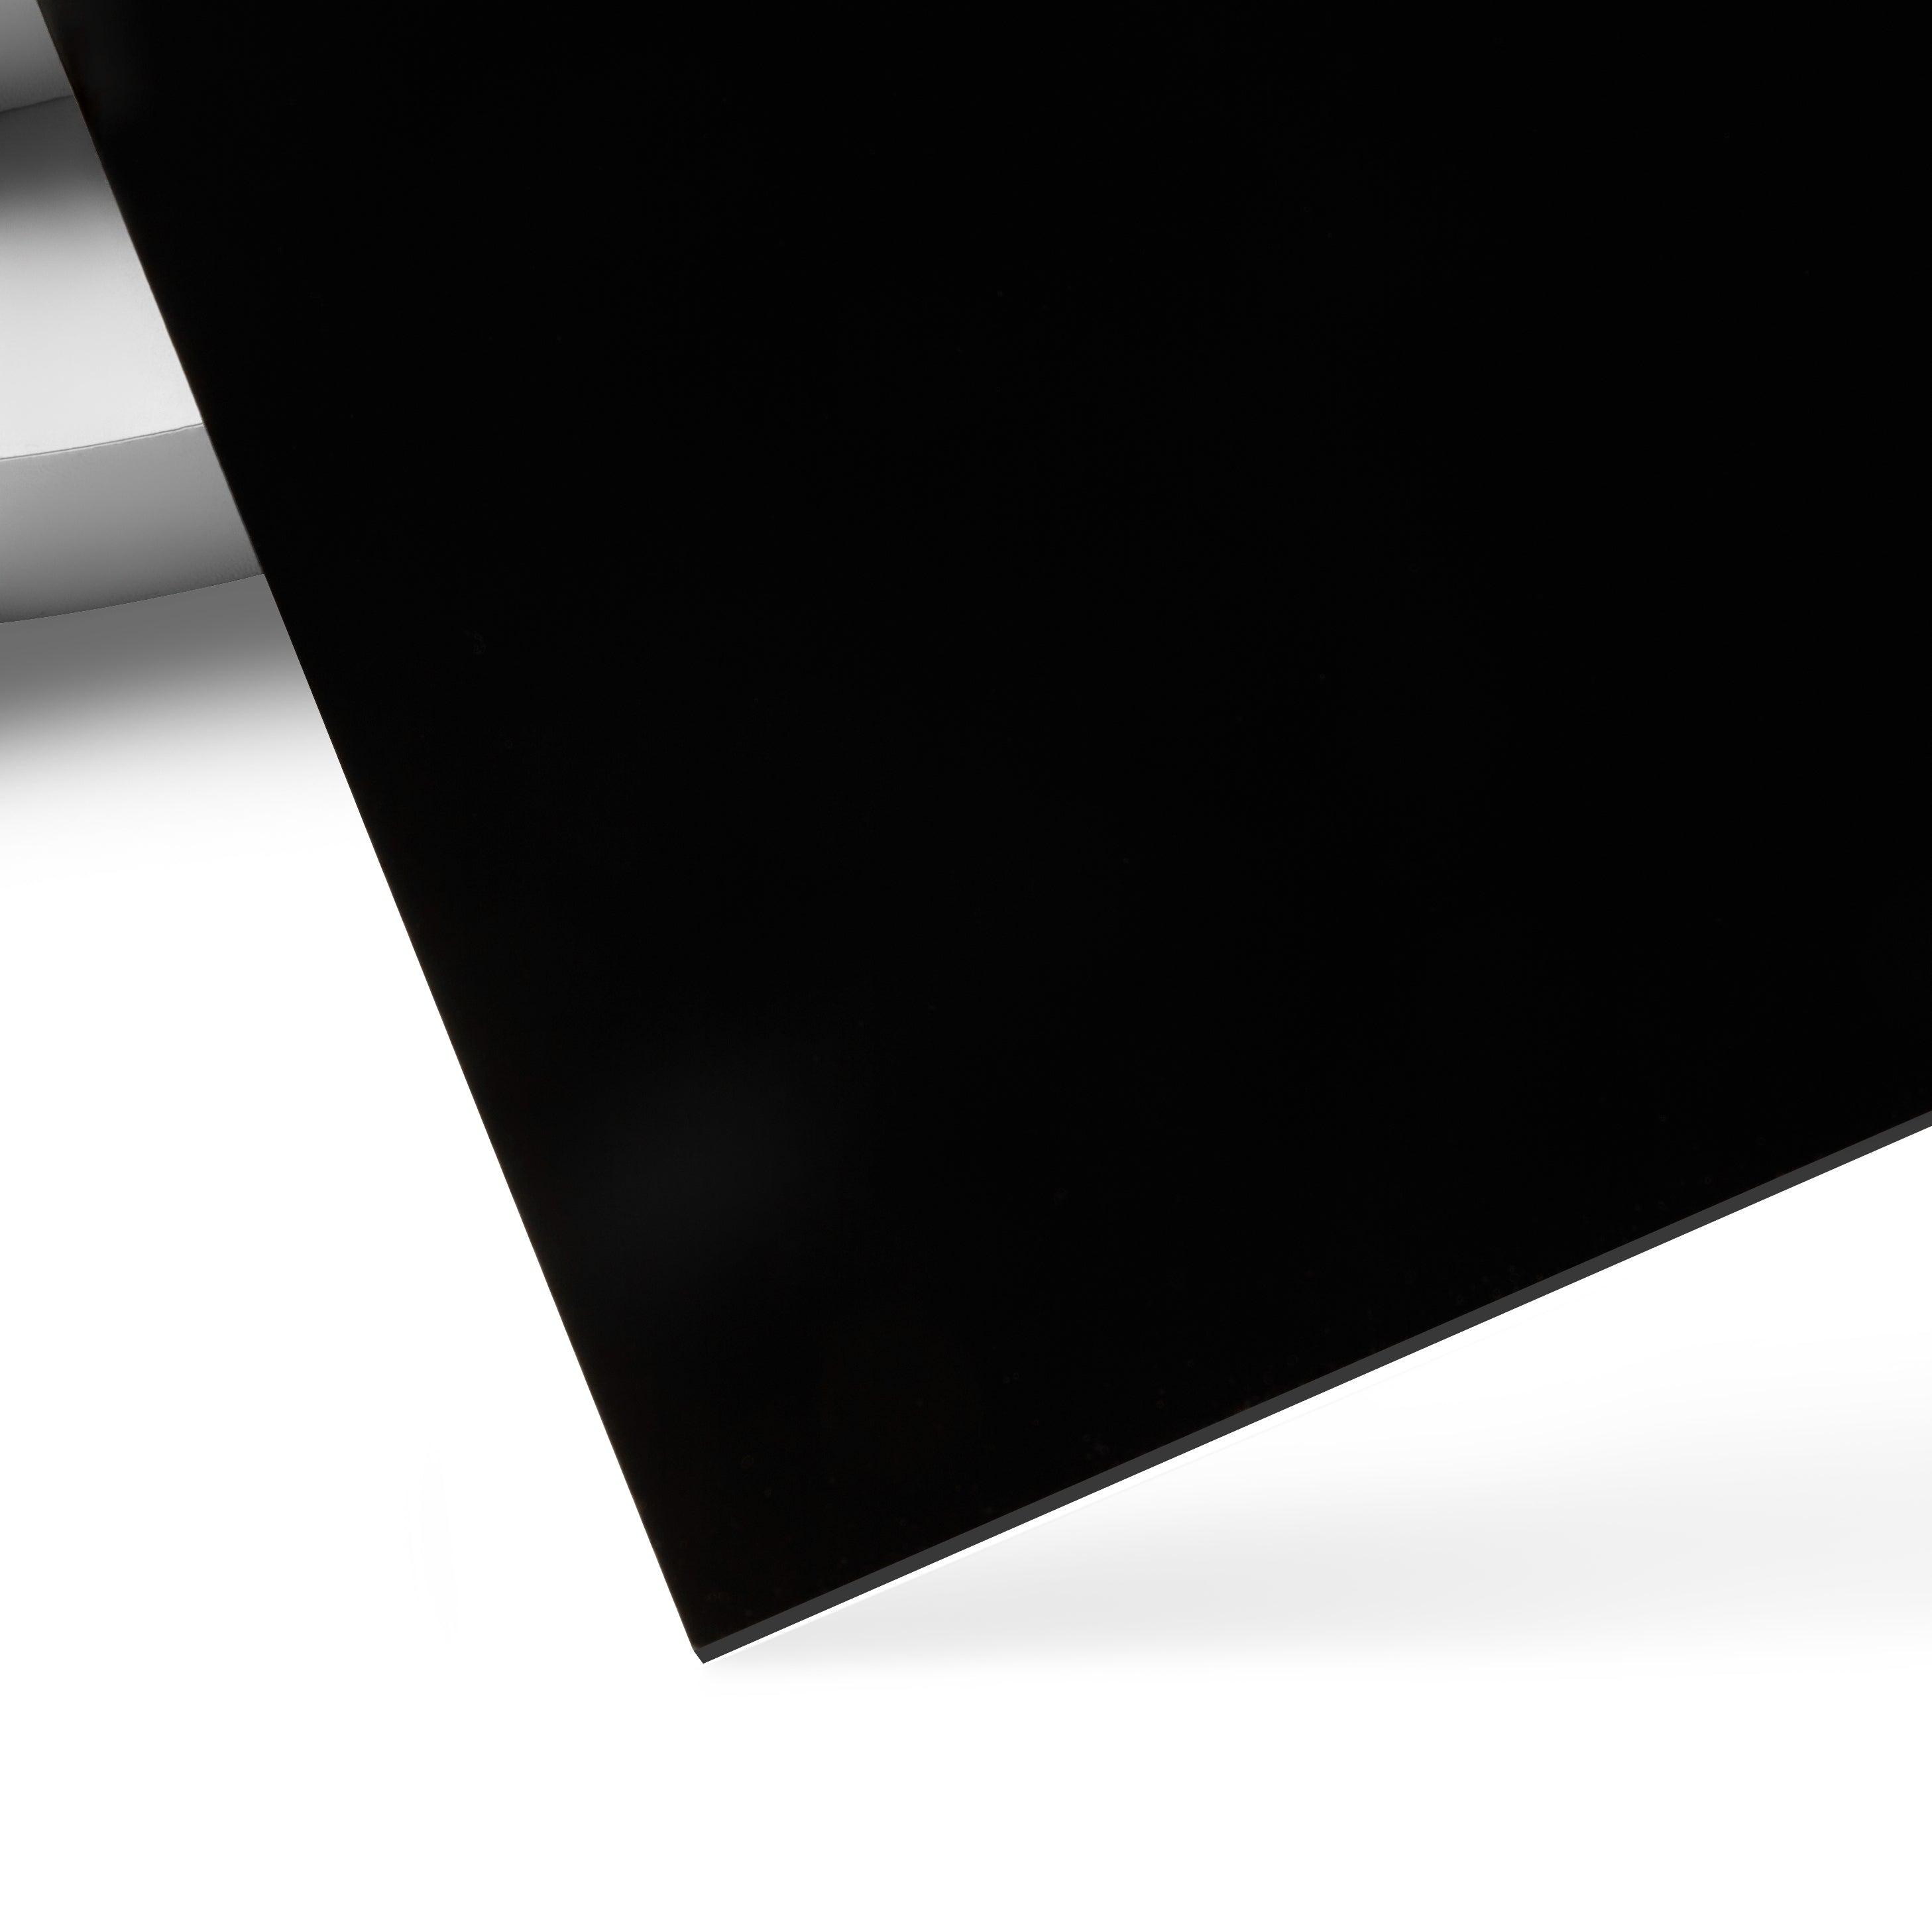 3mm Black Opaque Glossy Acrylic Sheet (3pcs)